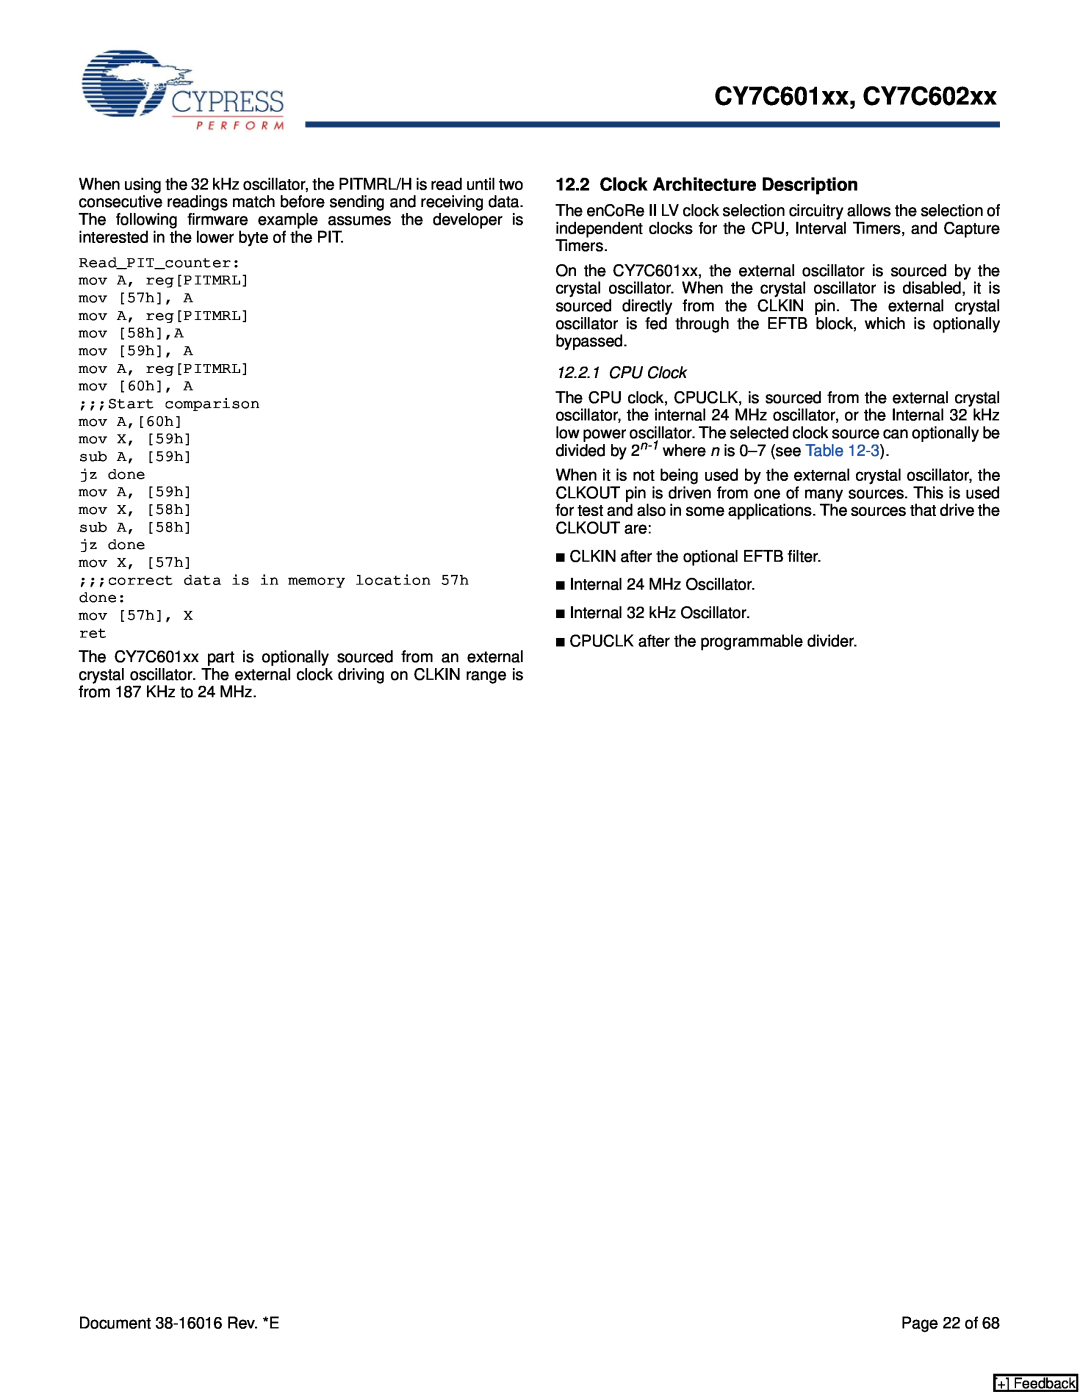 Cypress manual Clock Architecture Description, CPU Clock, CY7C601xx, CY7C602xx 